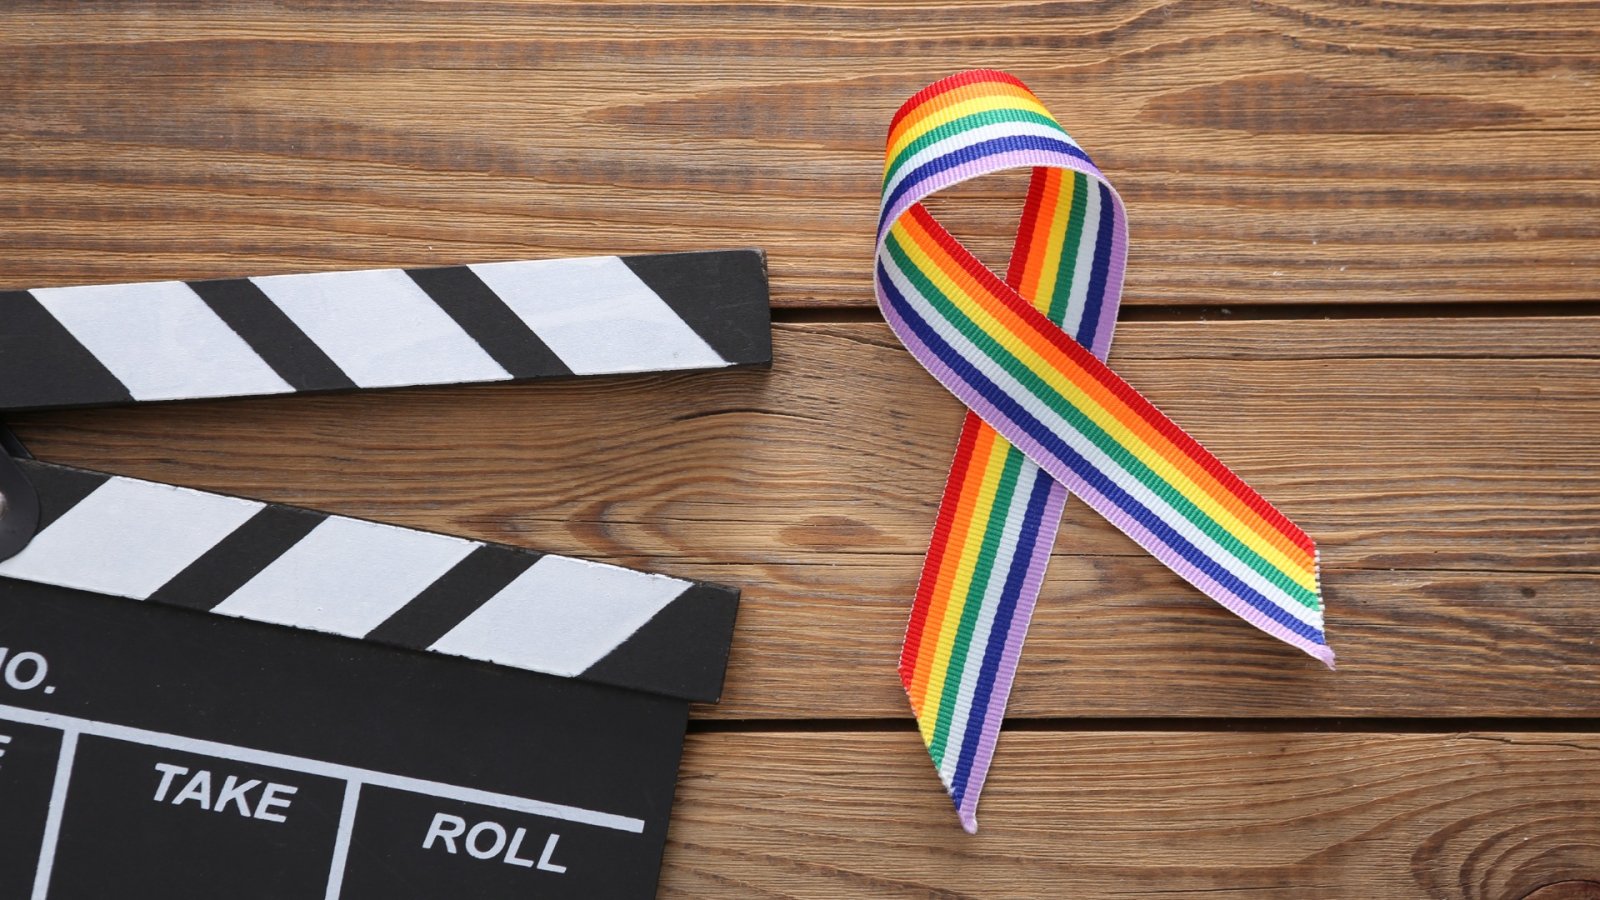 The most popular LGBTQ-themed films to enjoy this season